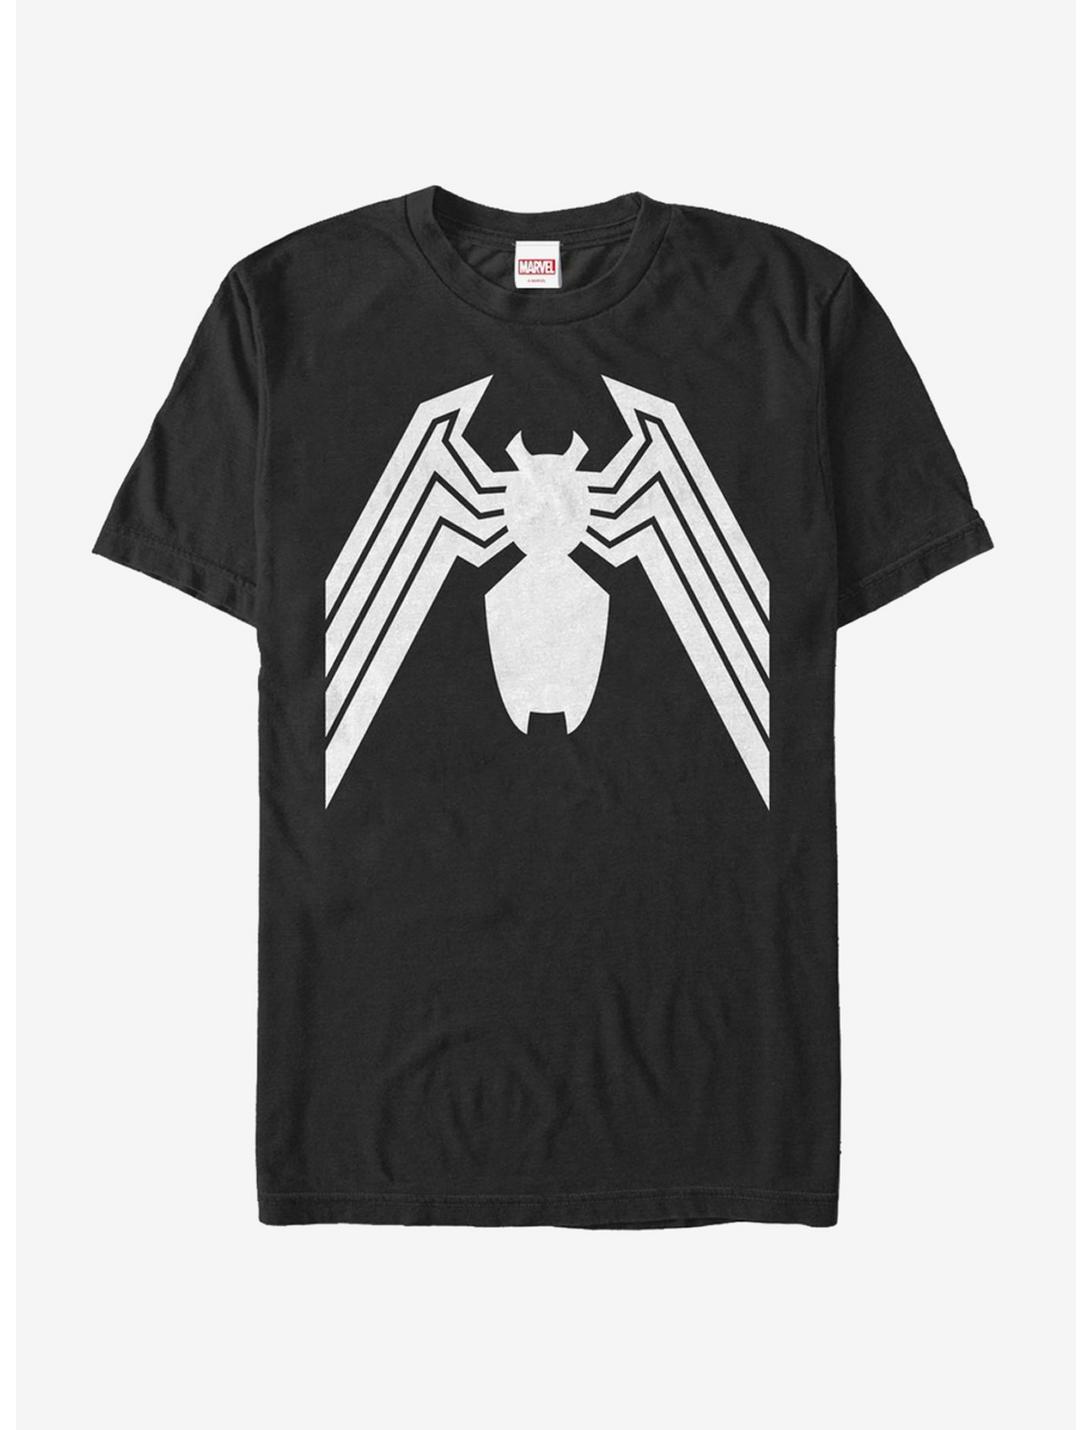 Marvel Venom Classic Logo T-Shirt, BLACK, hi-res